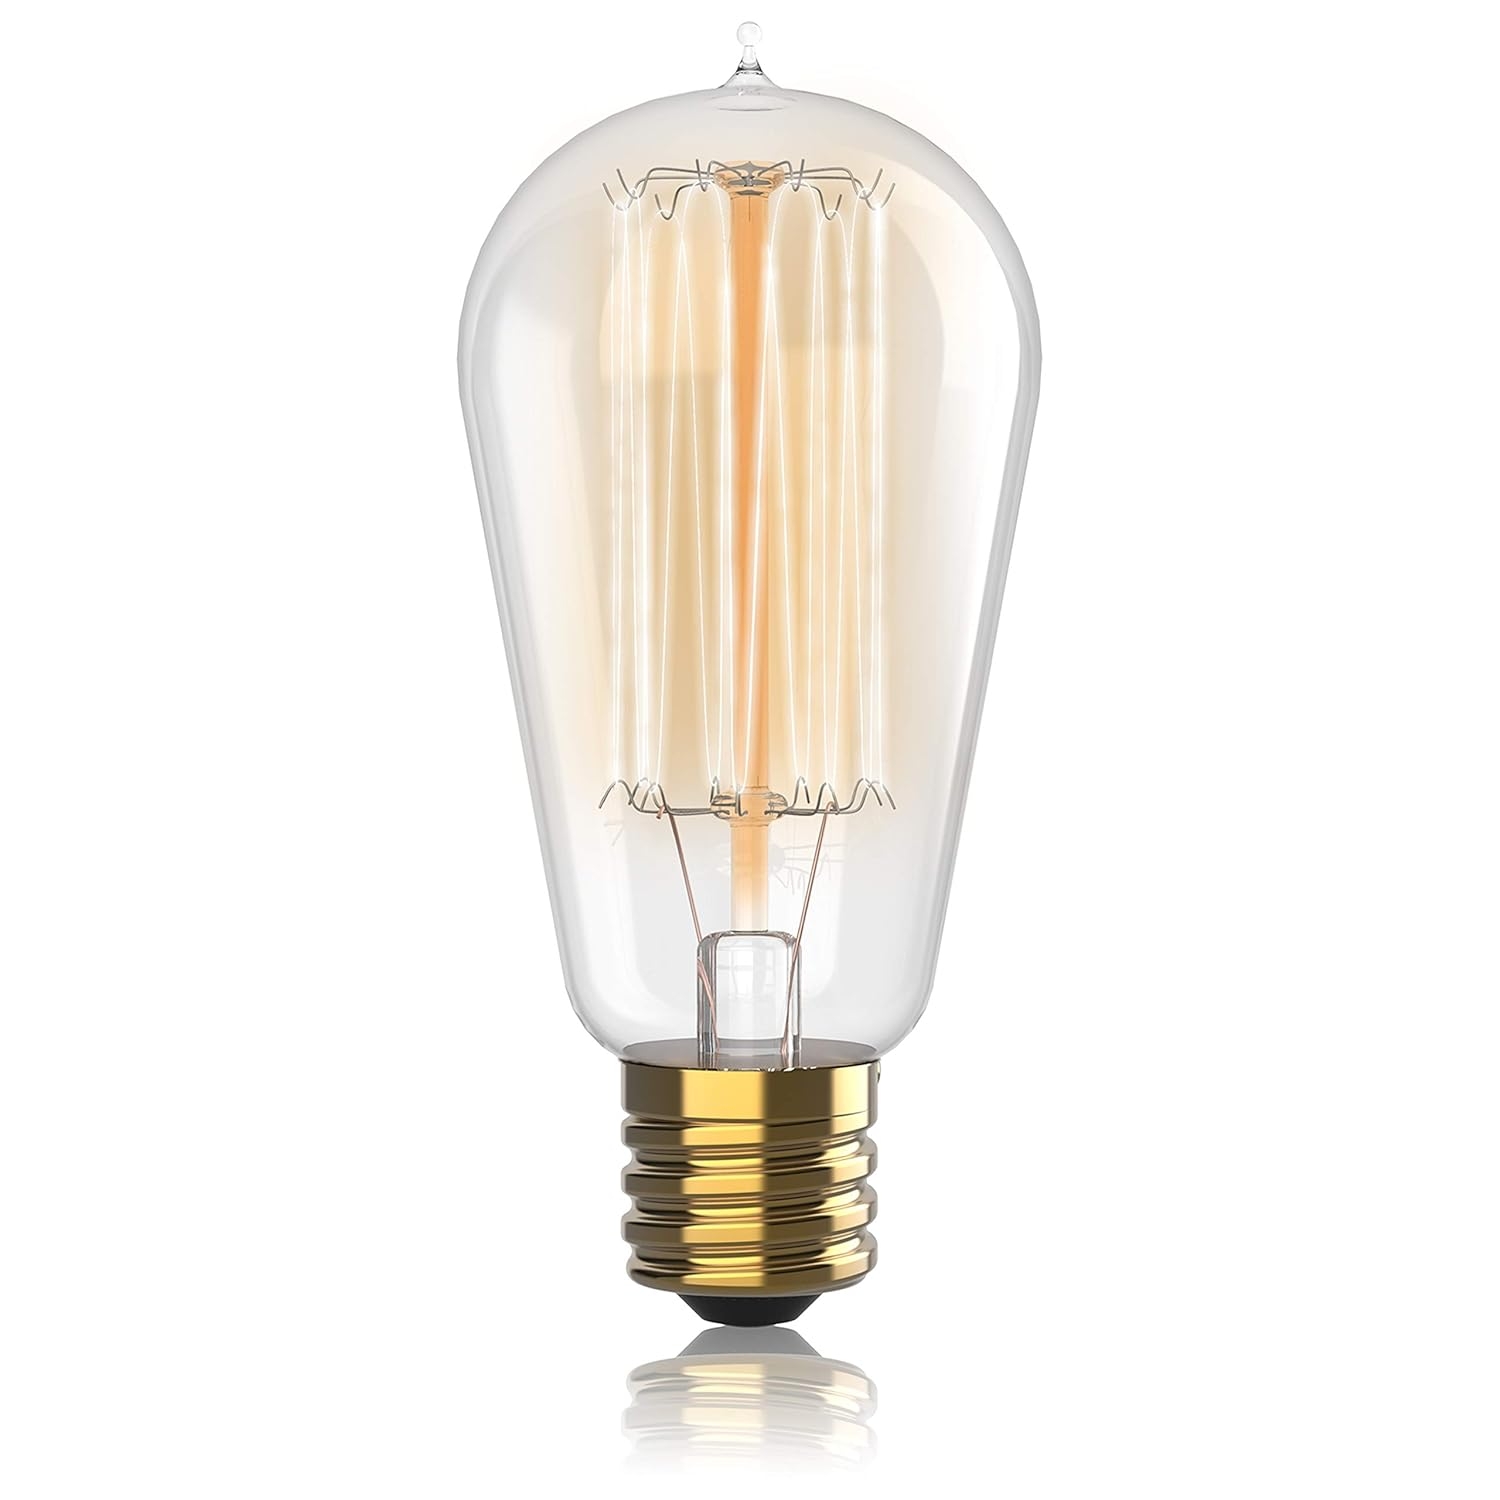 1 Pack - 60 watt Vintage Edison Bulb - Squirrel Cage Filament - 120 Volts - Dimmable - 230 Lumens - 2700k - E26 - ST58 Teardrop Top